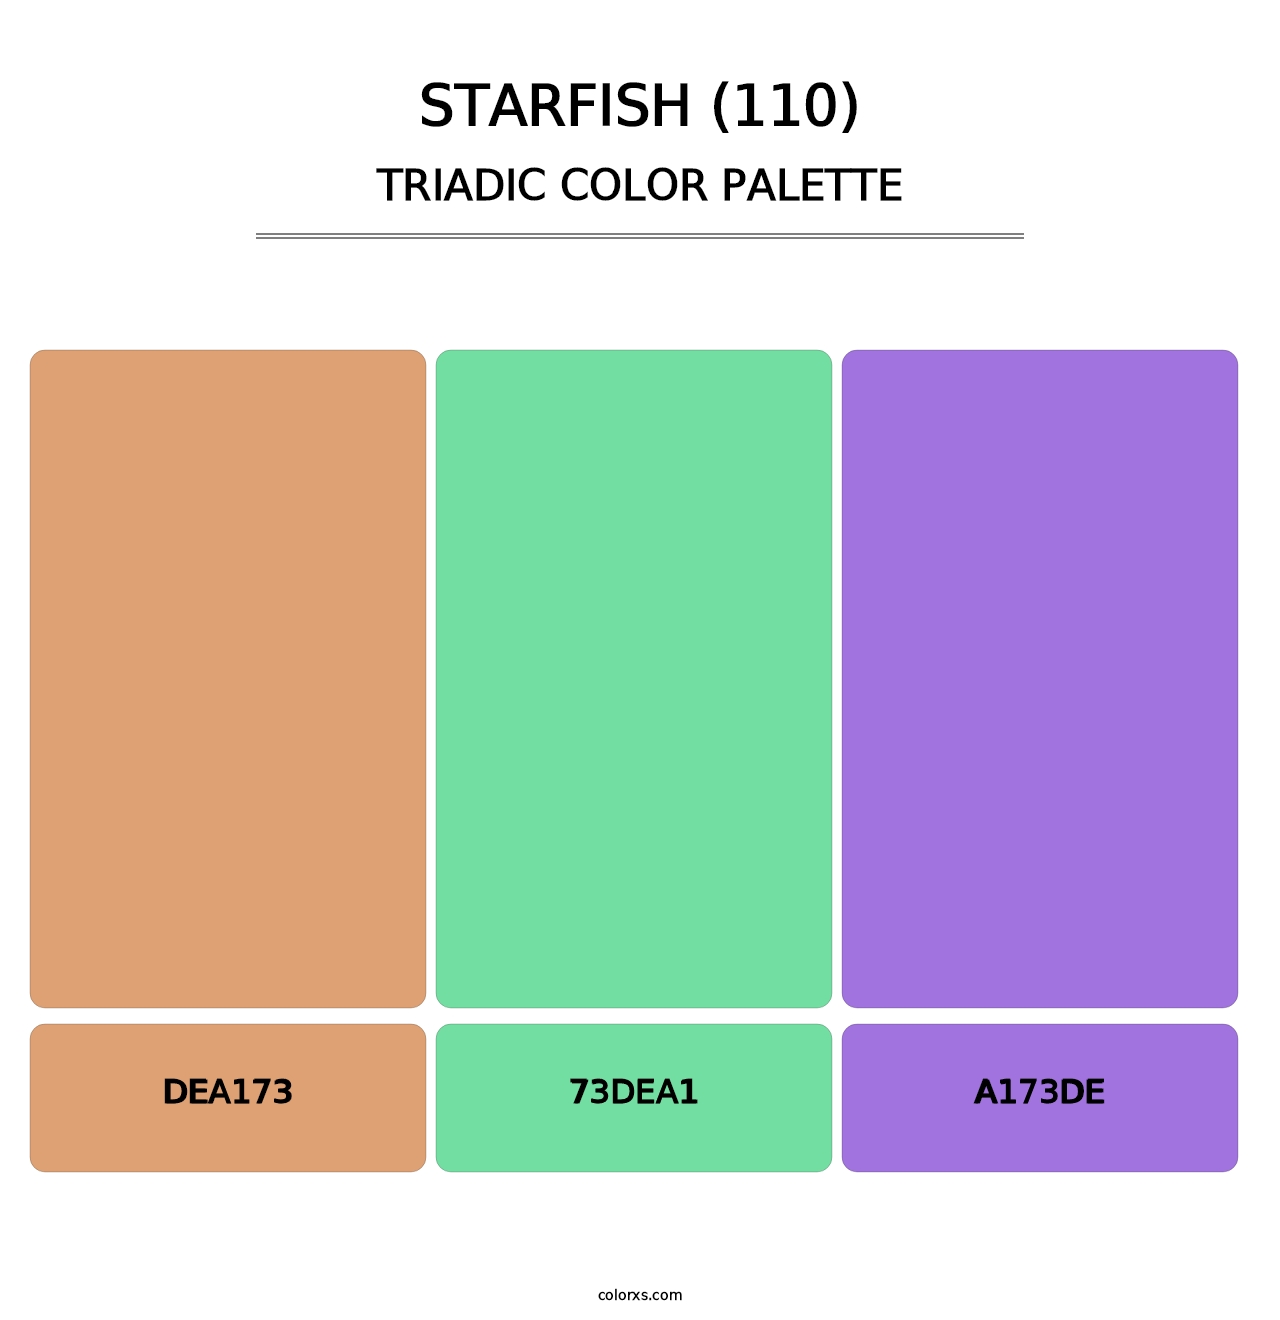 Starfish (110) - Triadic Color Palette